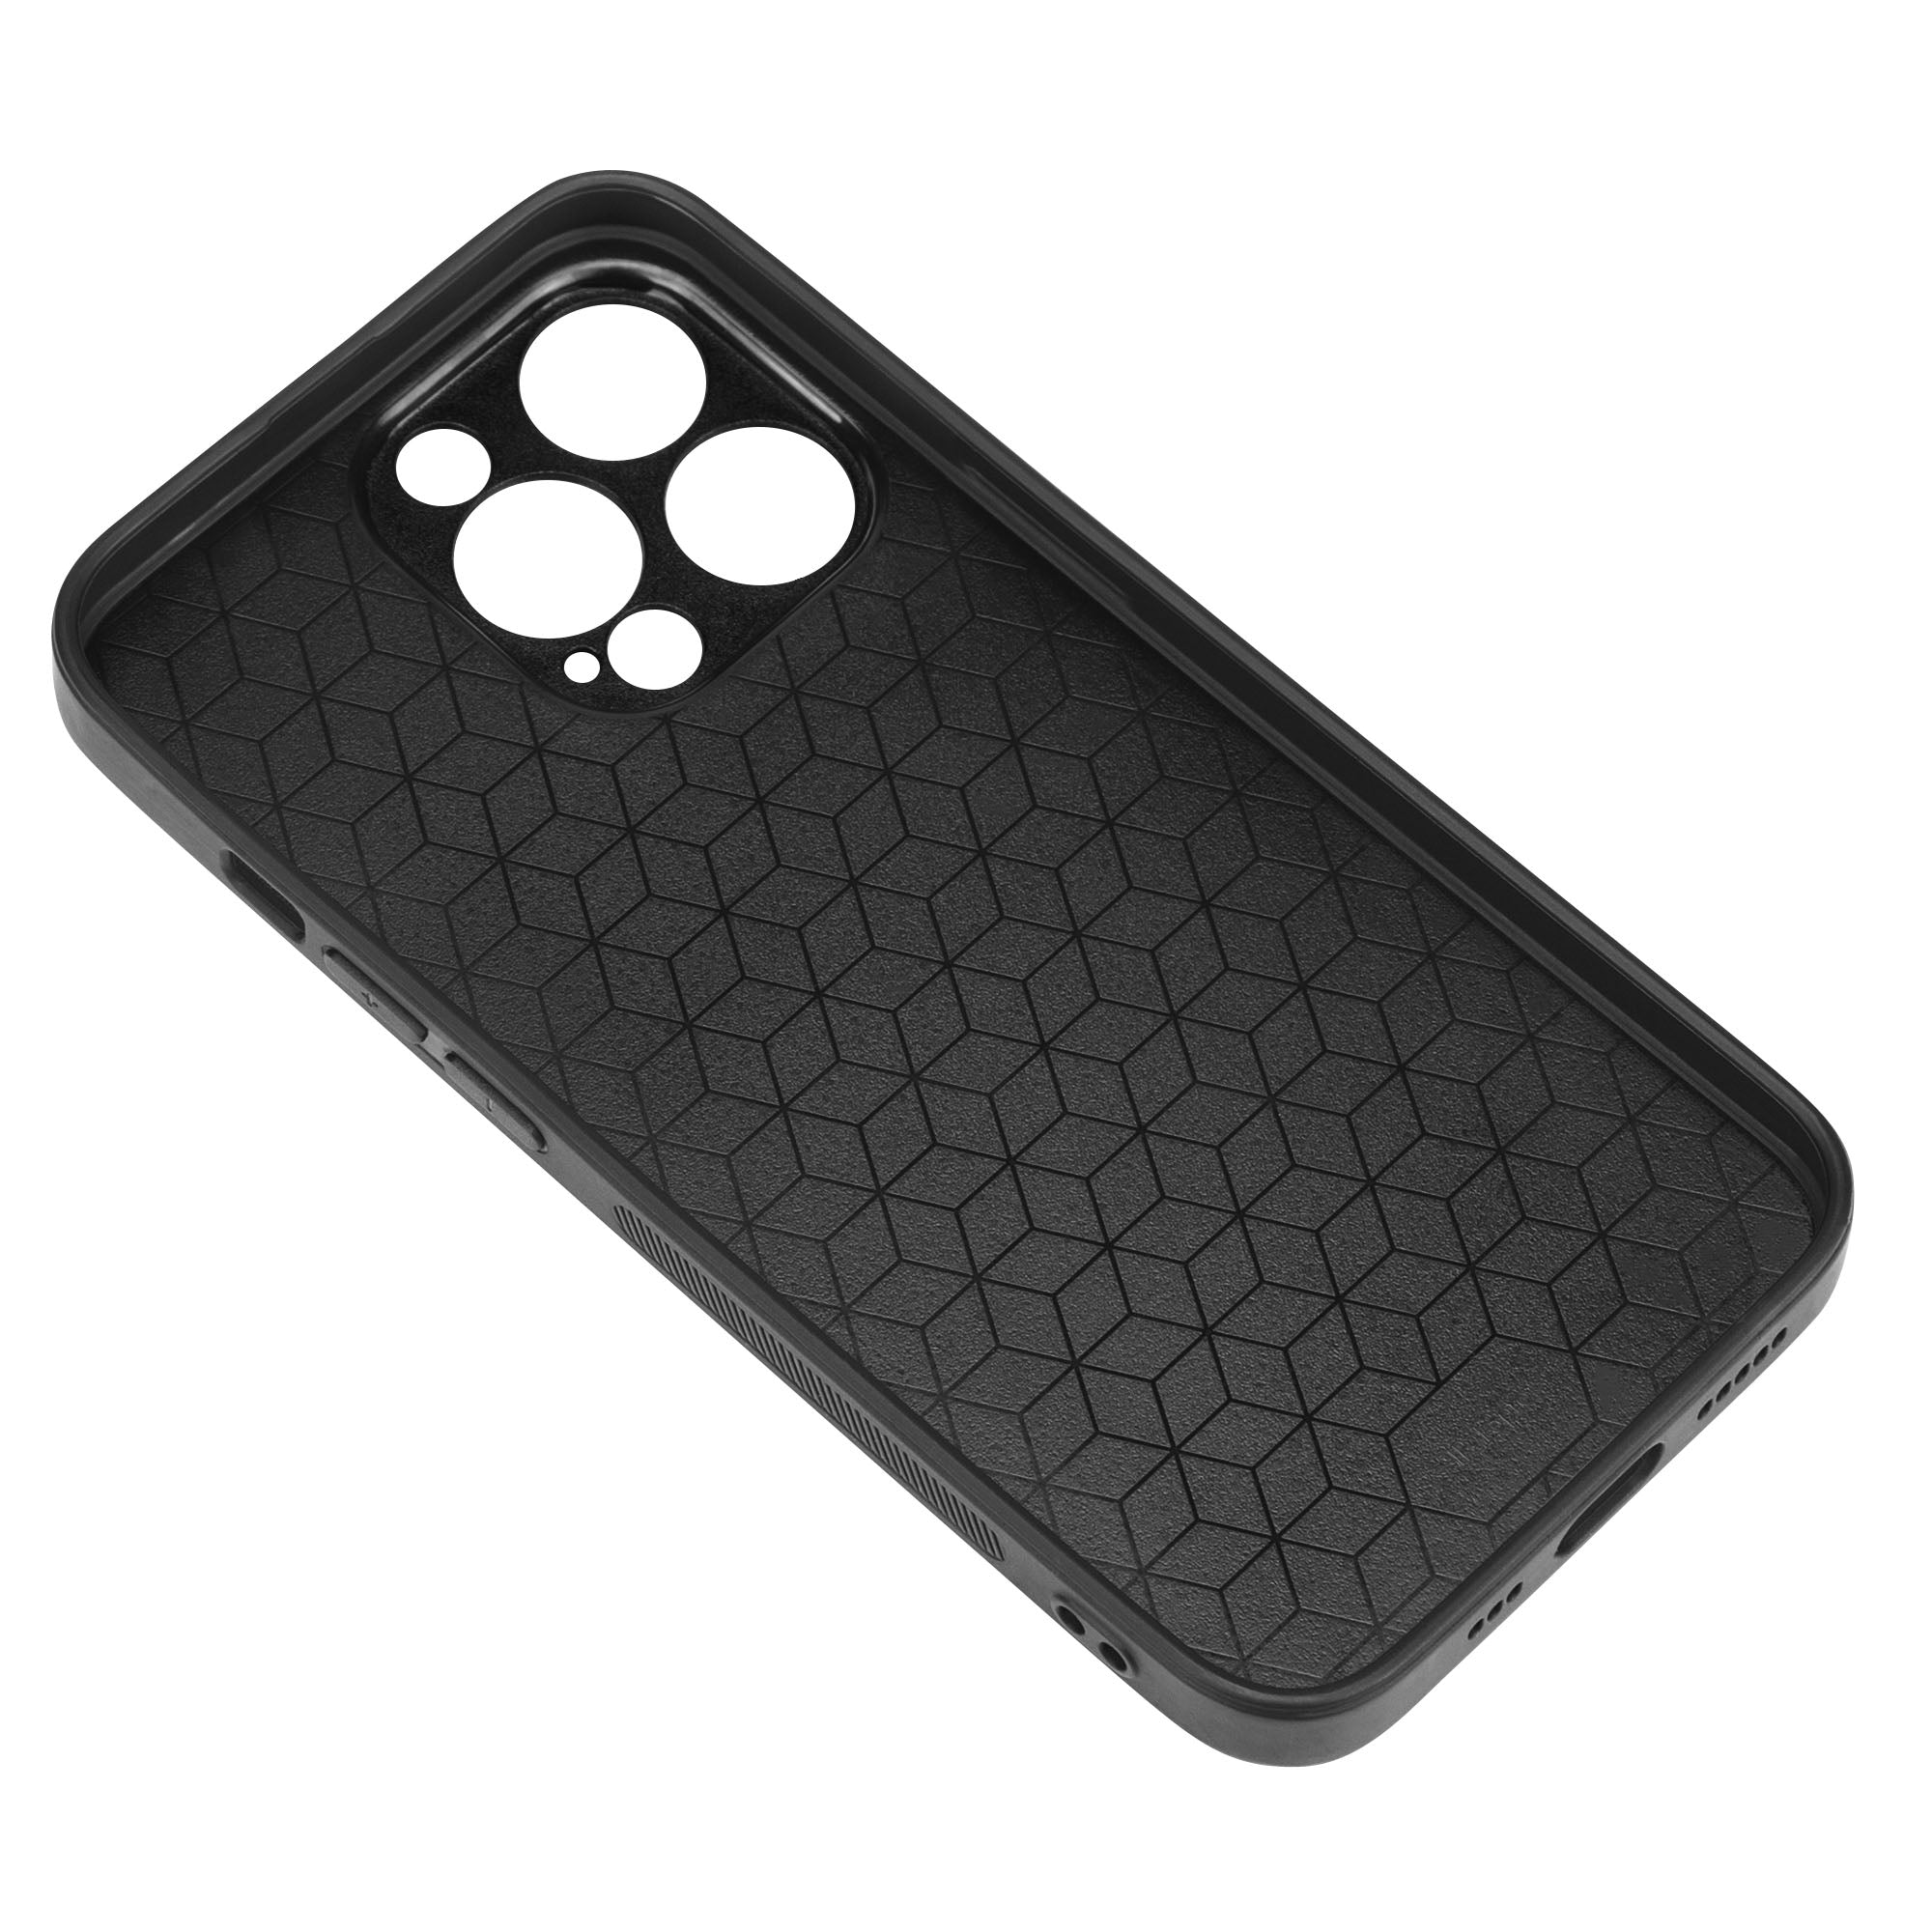 4th Dimension Media iPhone13 Series Phone Cases